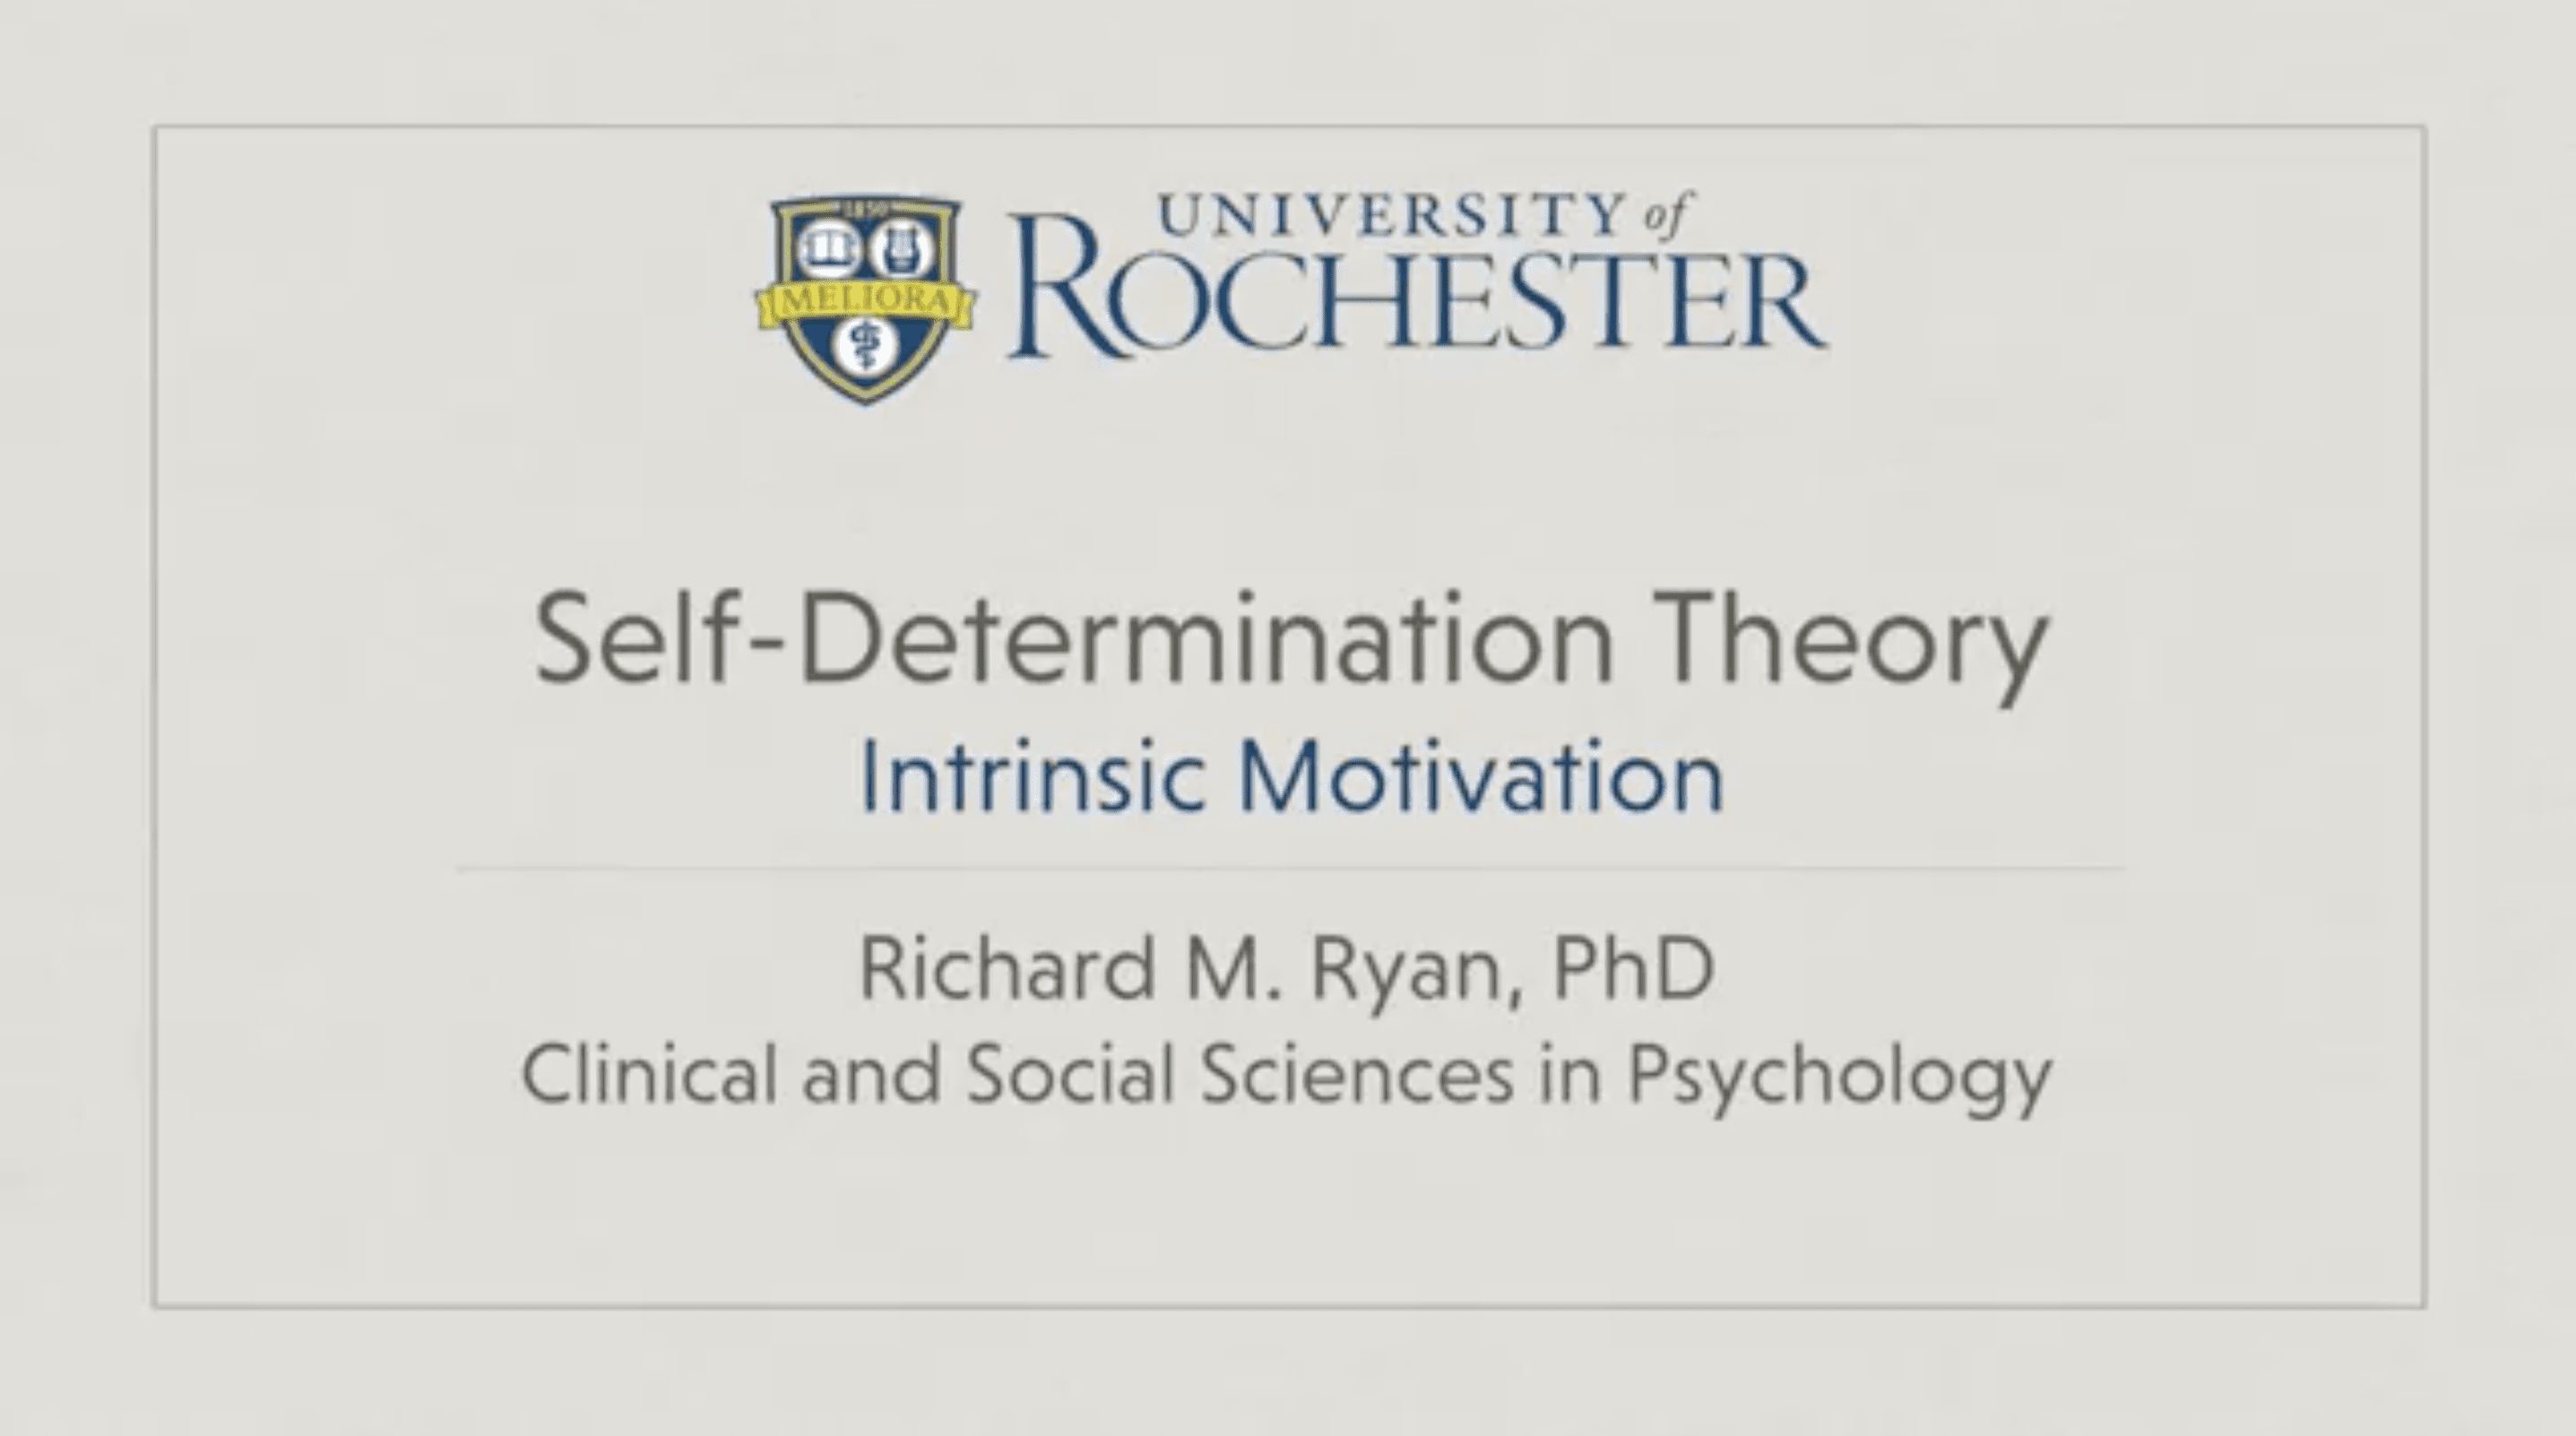 Intrinsic Motivation Coursera video with Richard M Ryan